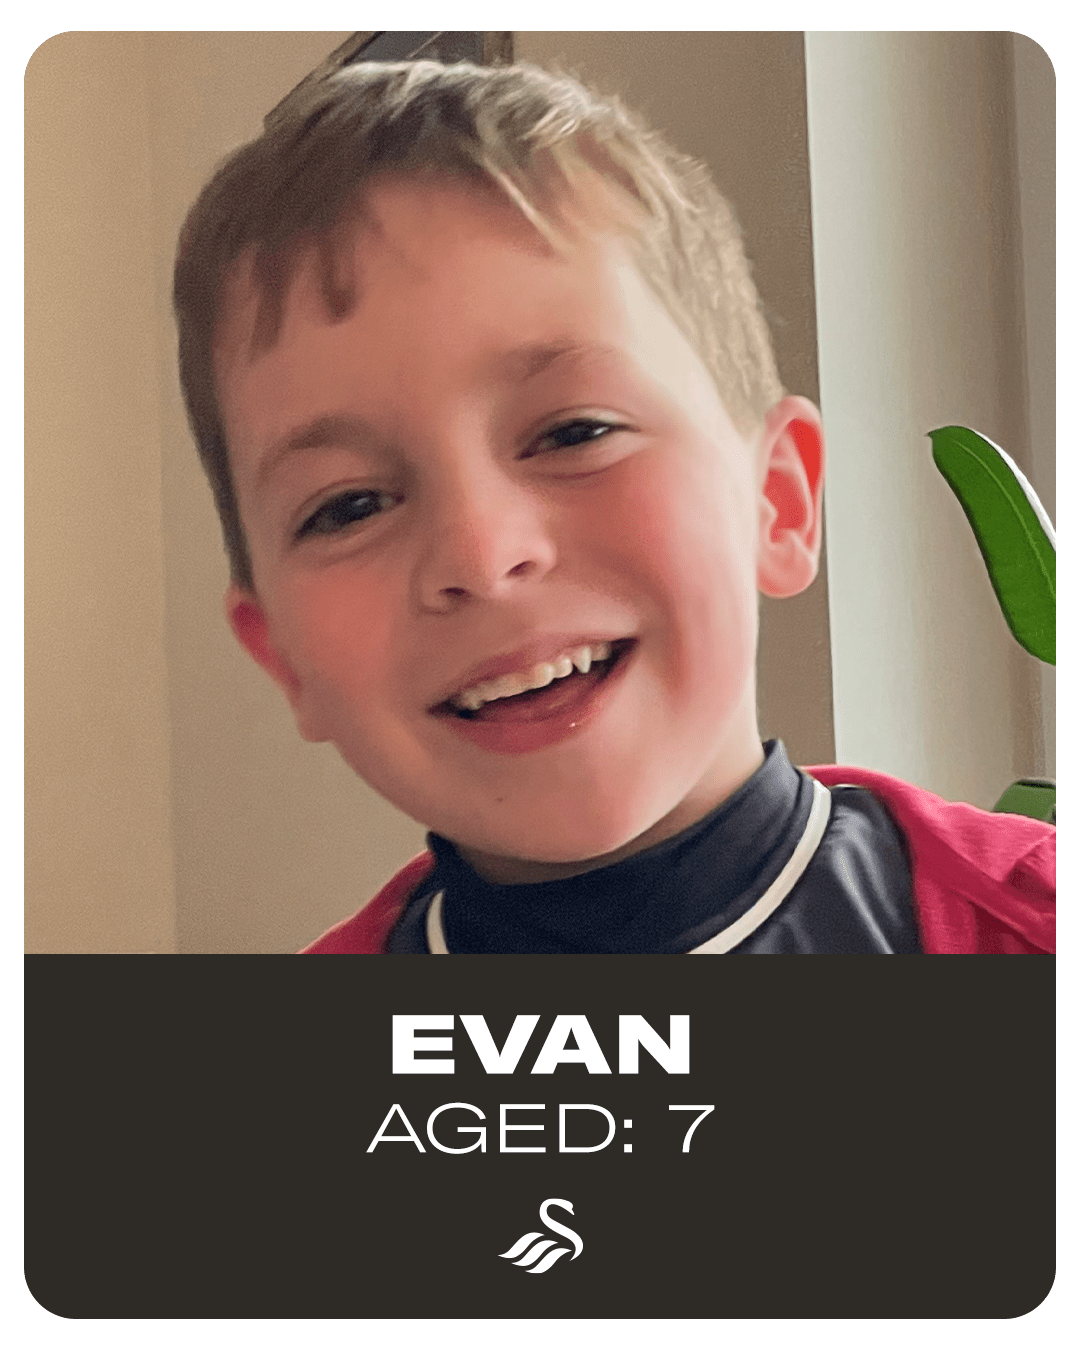 Evan, aged 7